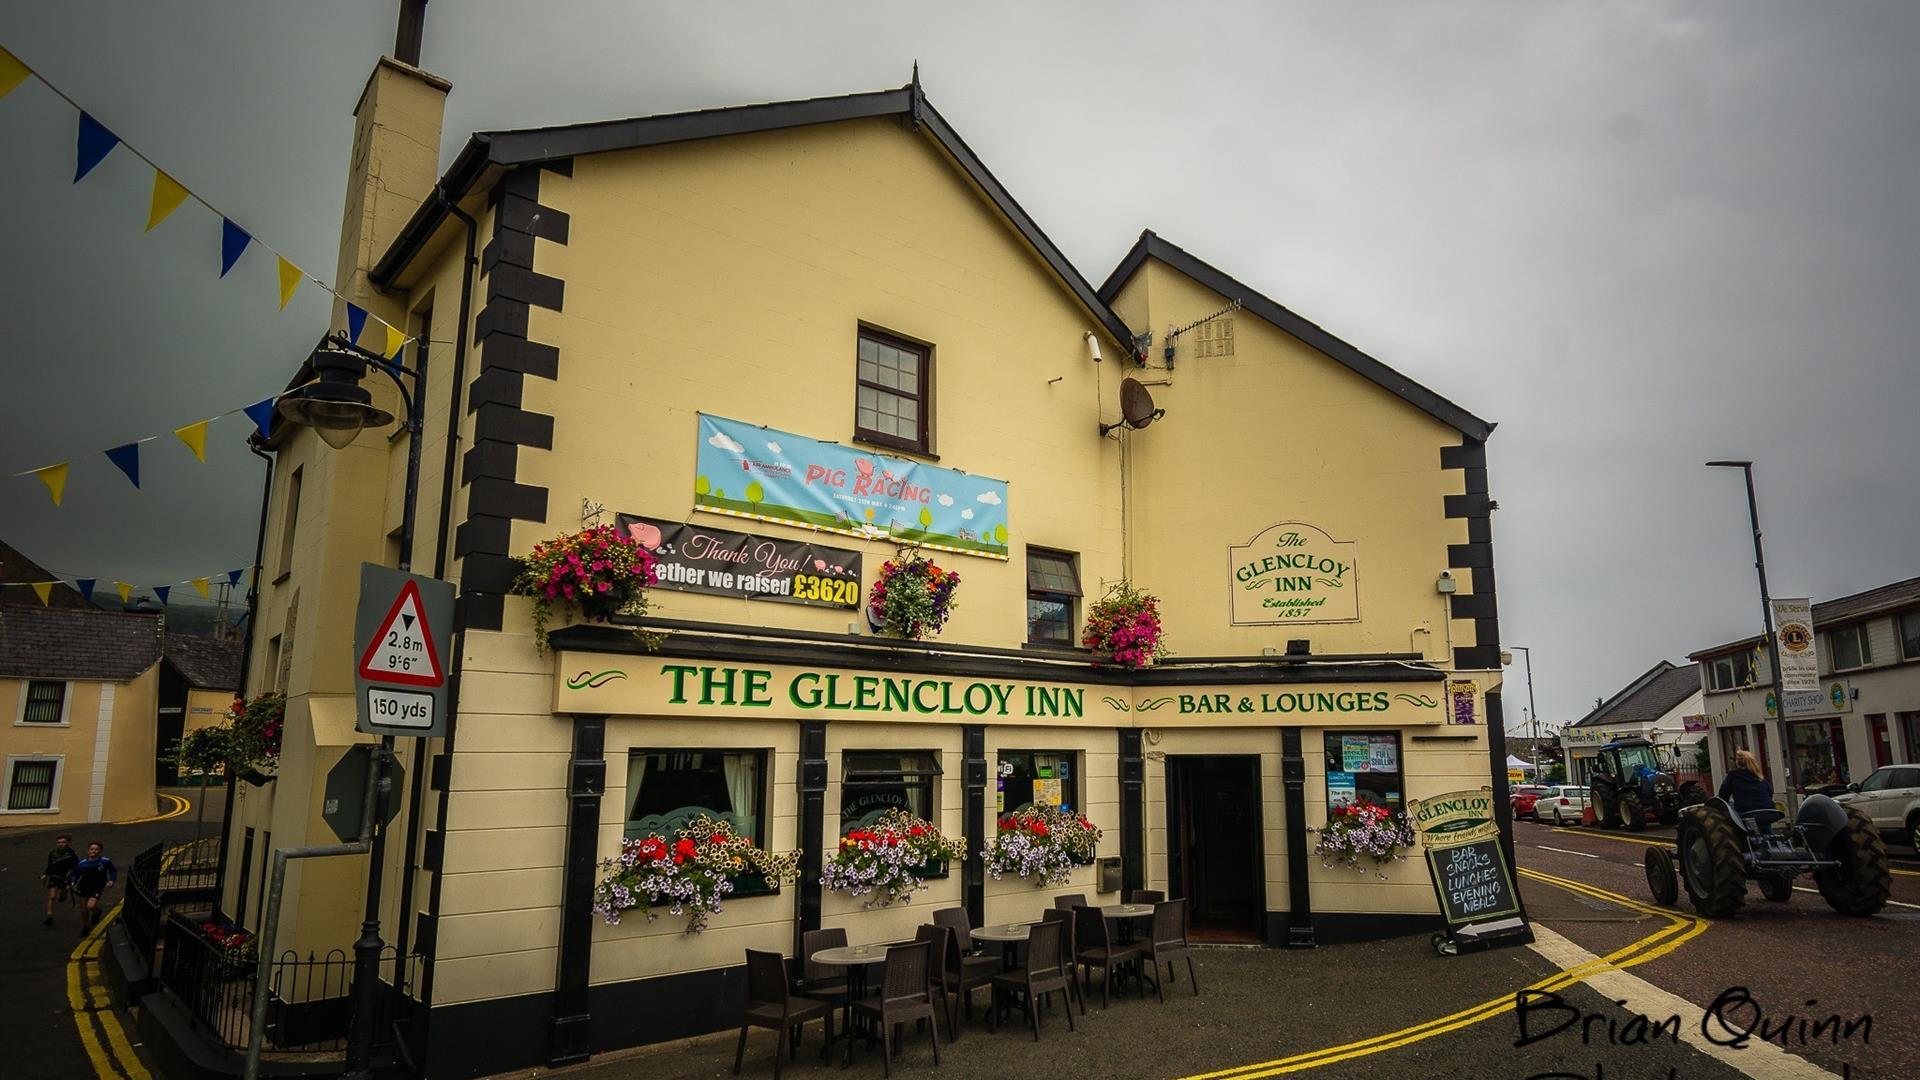 The Glencloy Inn